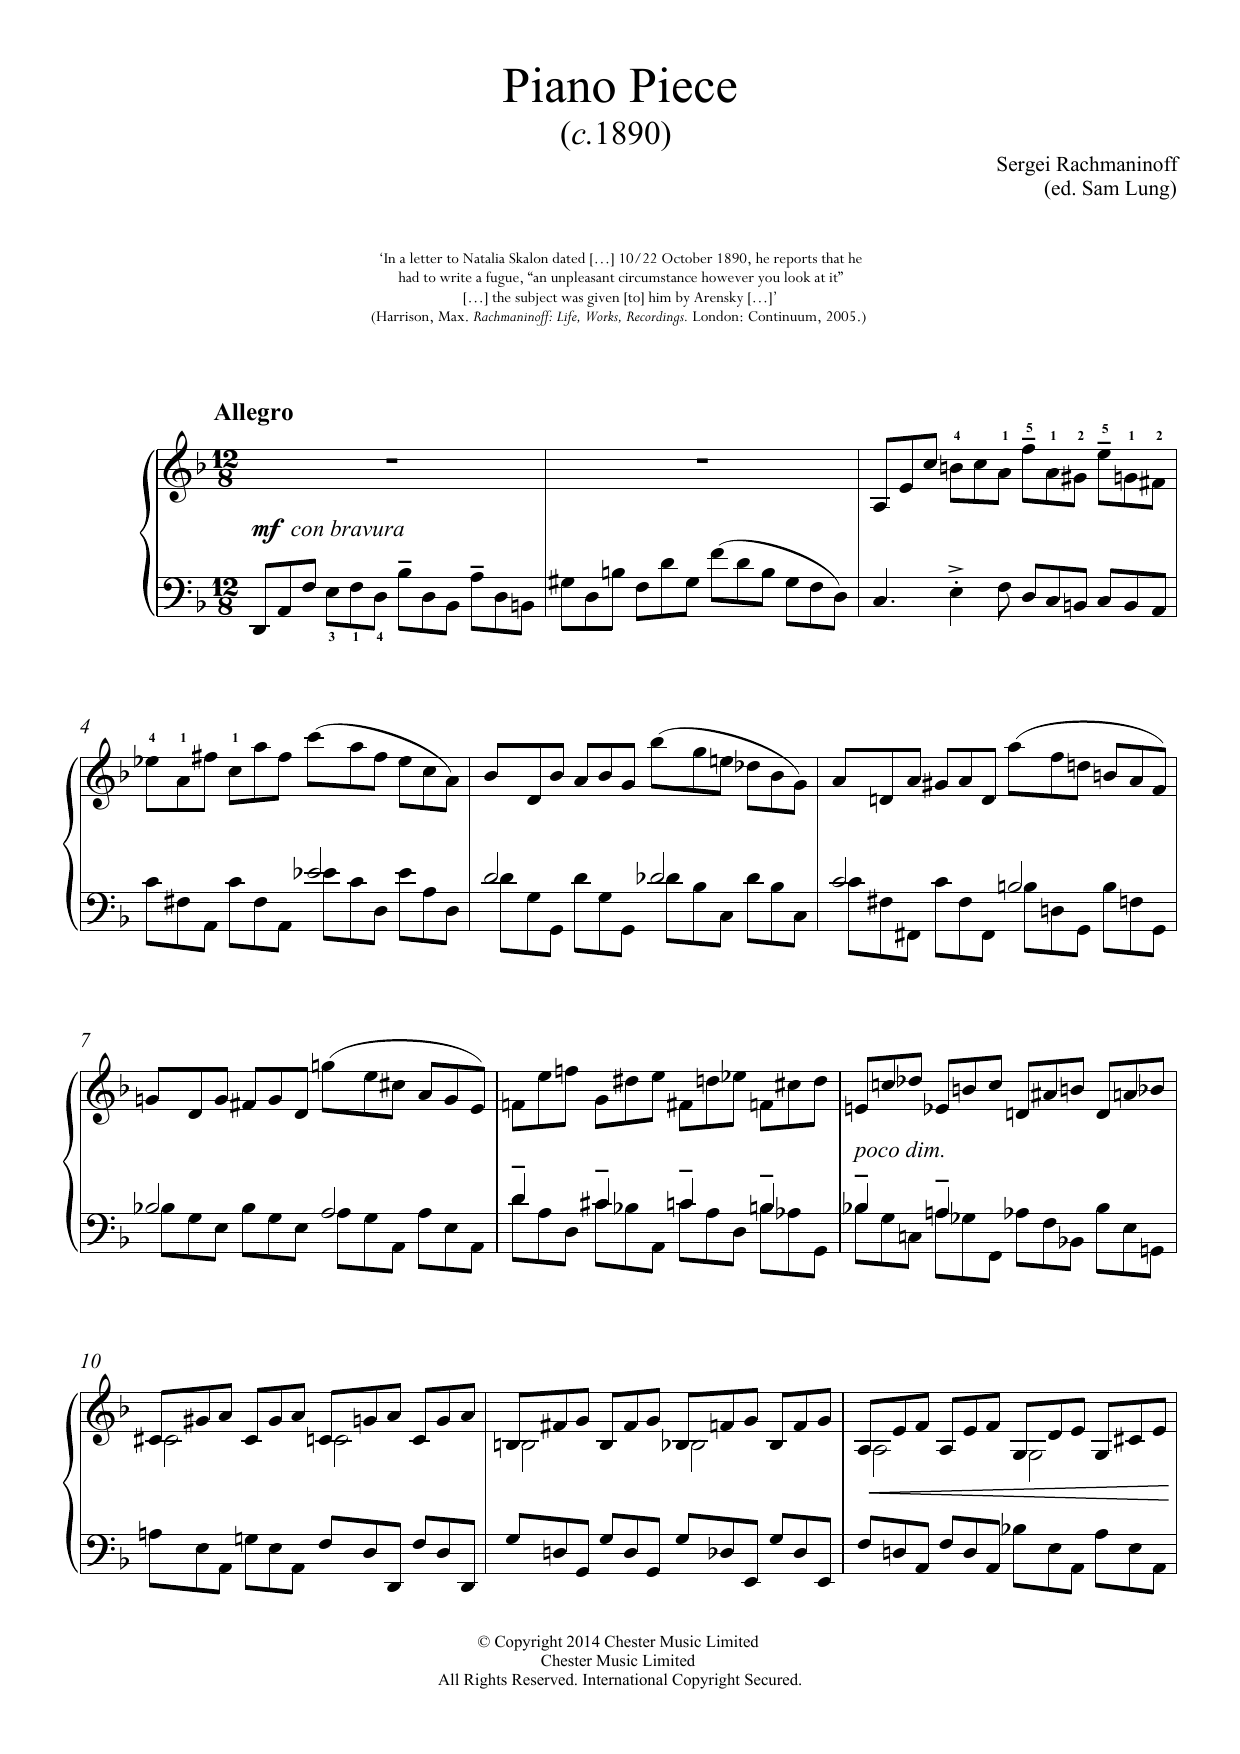 Download Sergei Rachmaninoff Piano Piece in D minor Sheet Music